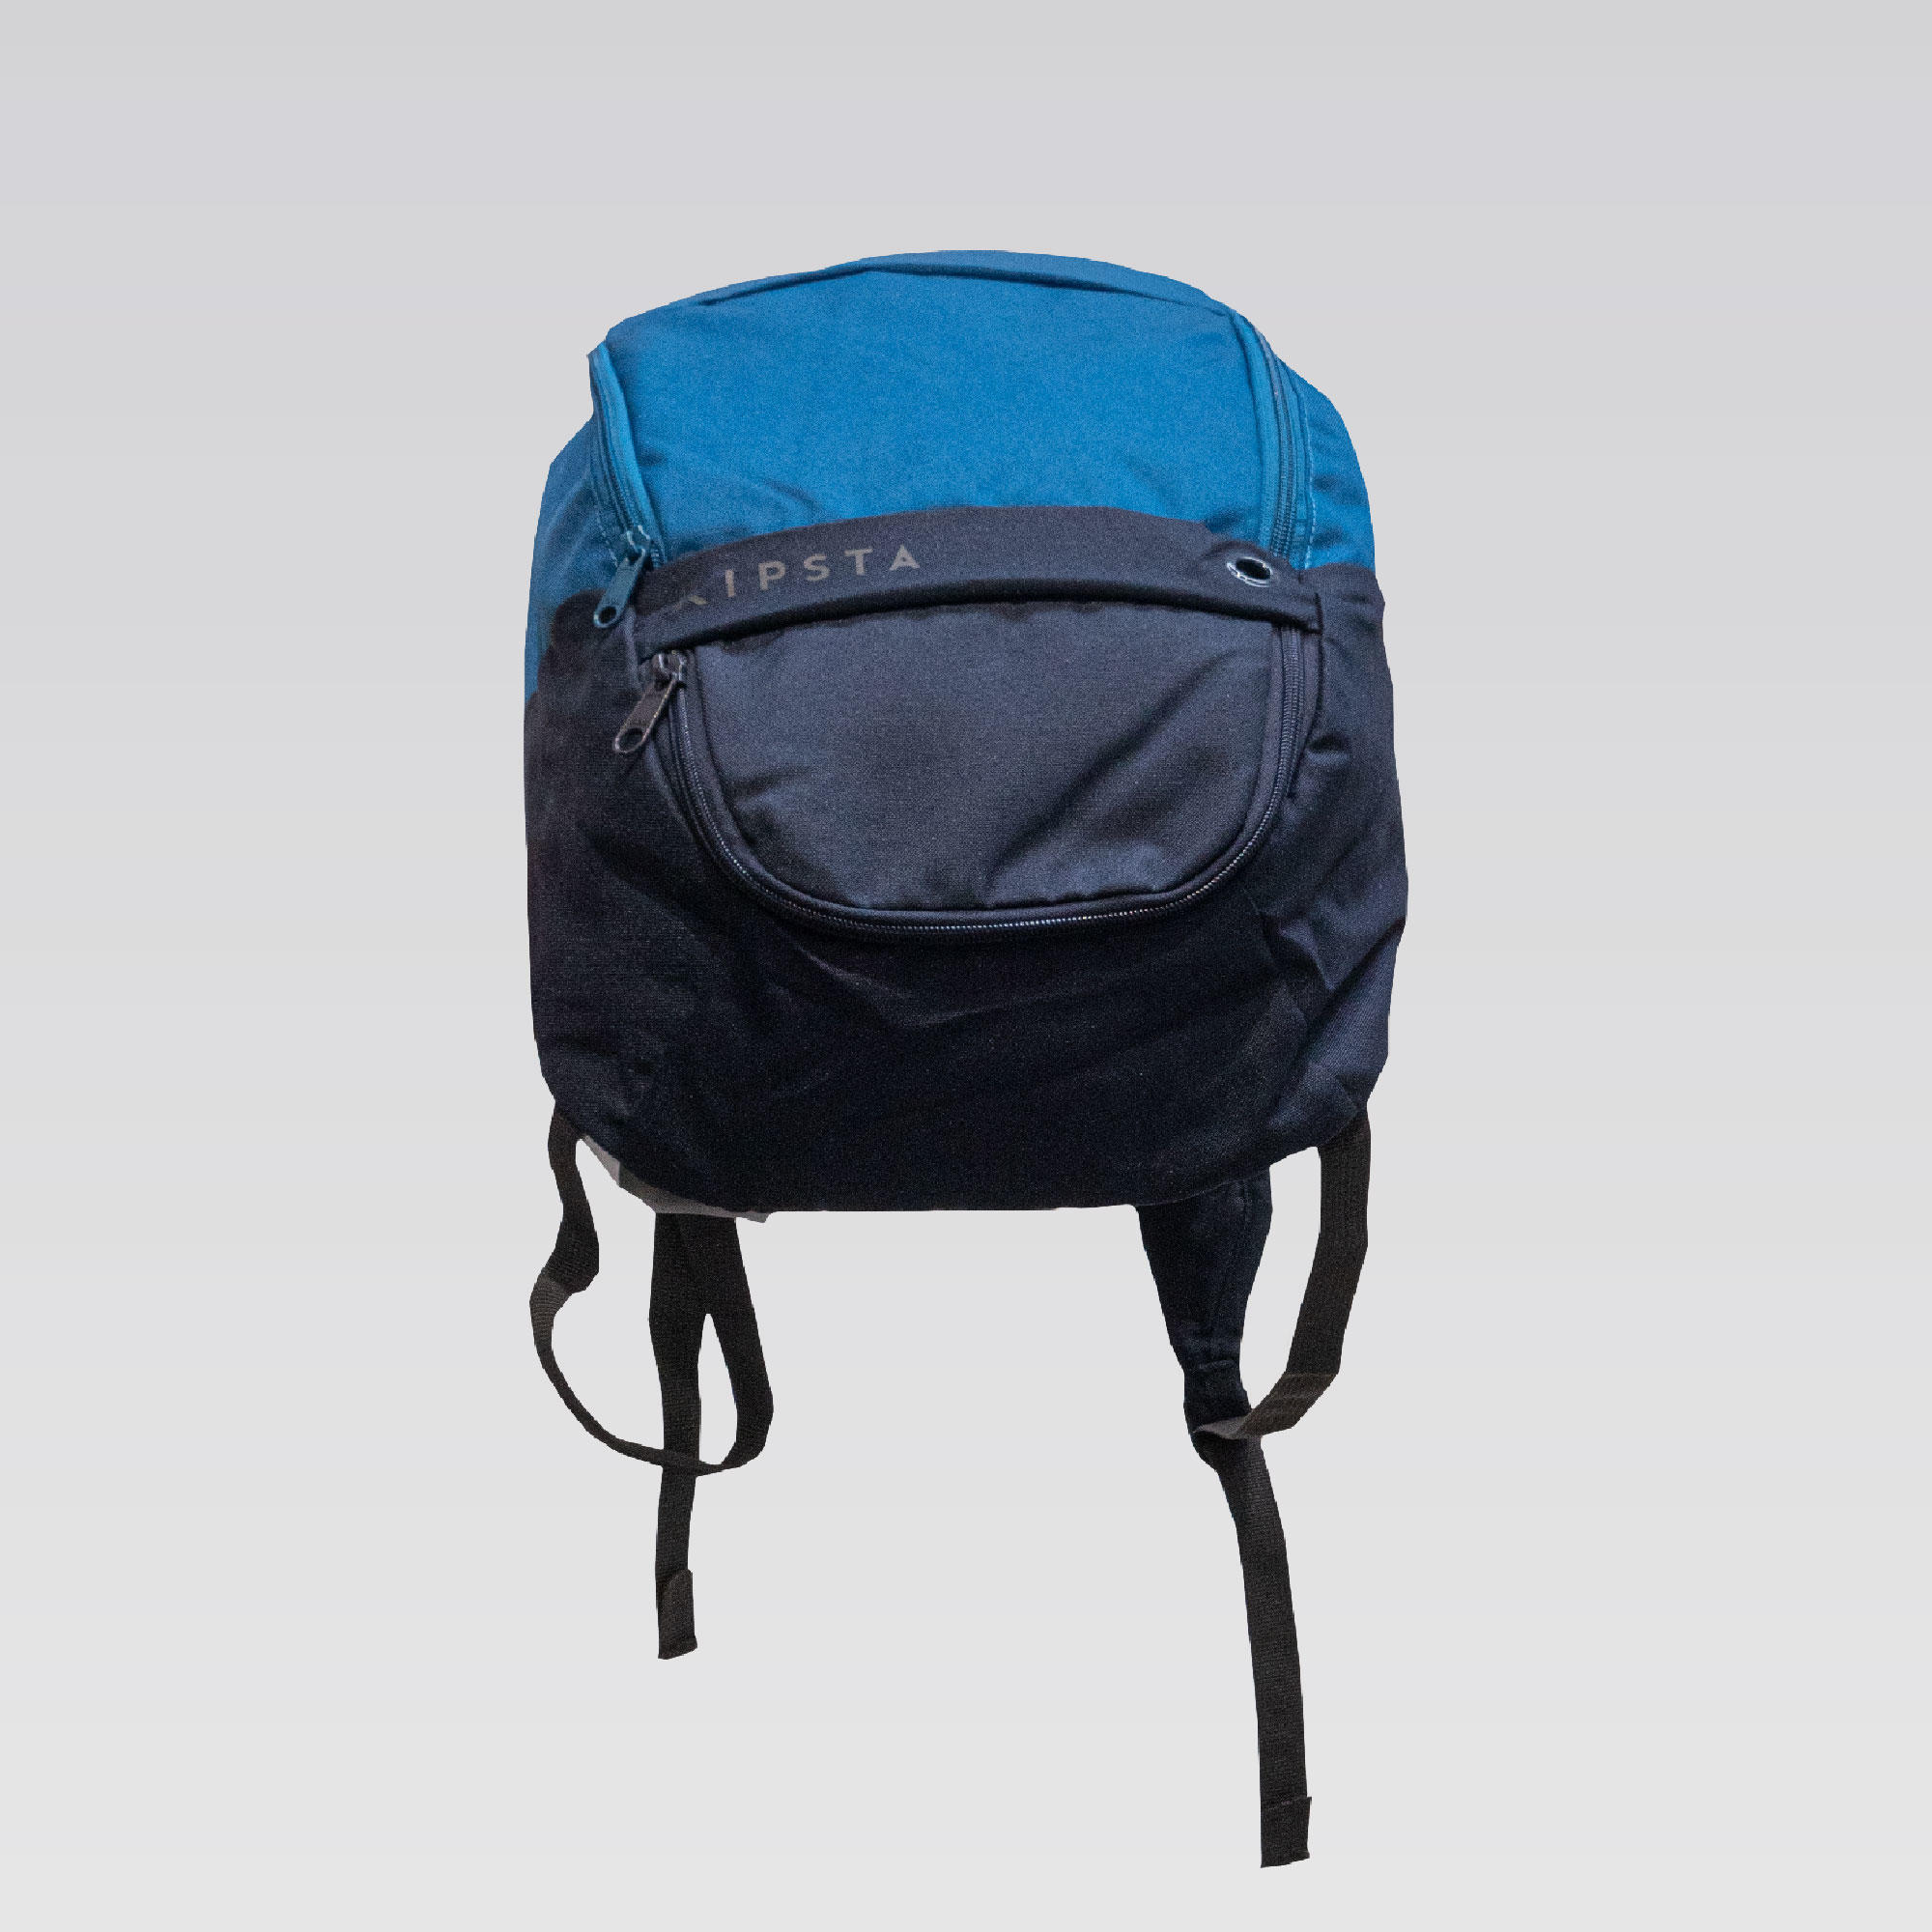 Small Cabin Bag Review 👜 Decathlon Kipsta Bag 20L capacity 40x20x25cm... |  TikTok